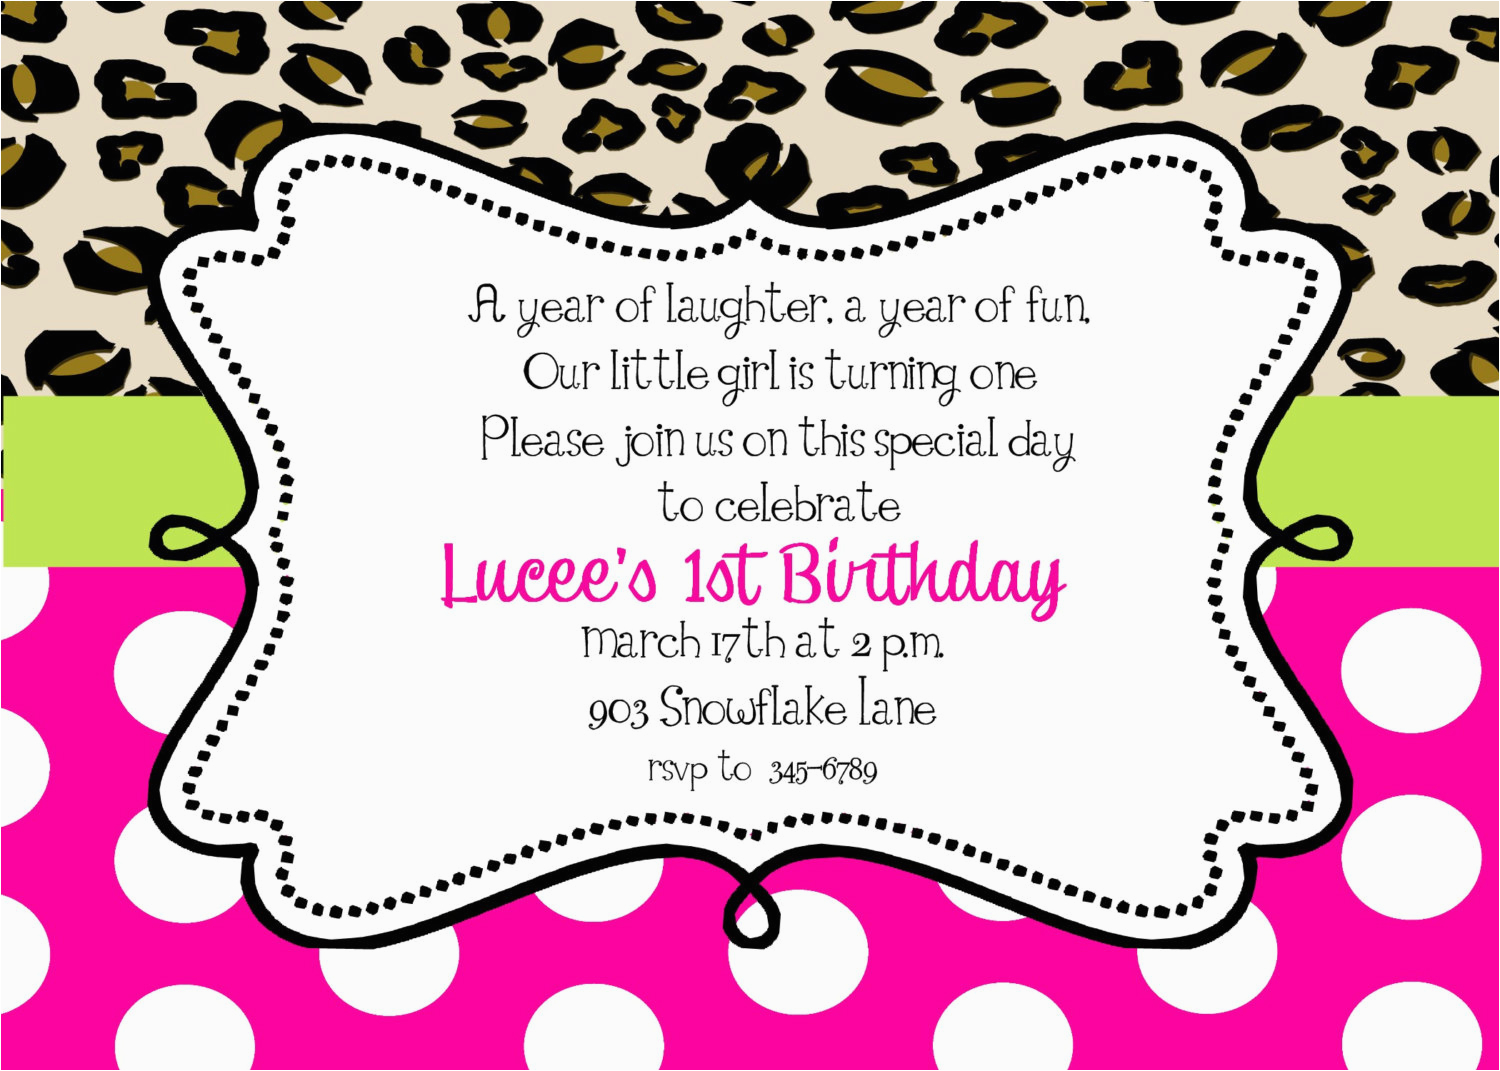 12th-birthday-invitation-wording-12th-birthday-invitations-lijicinu